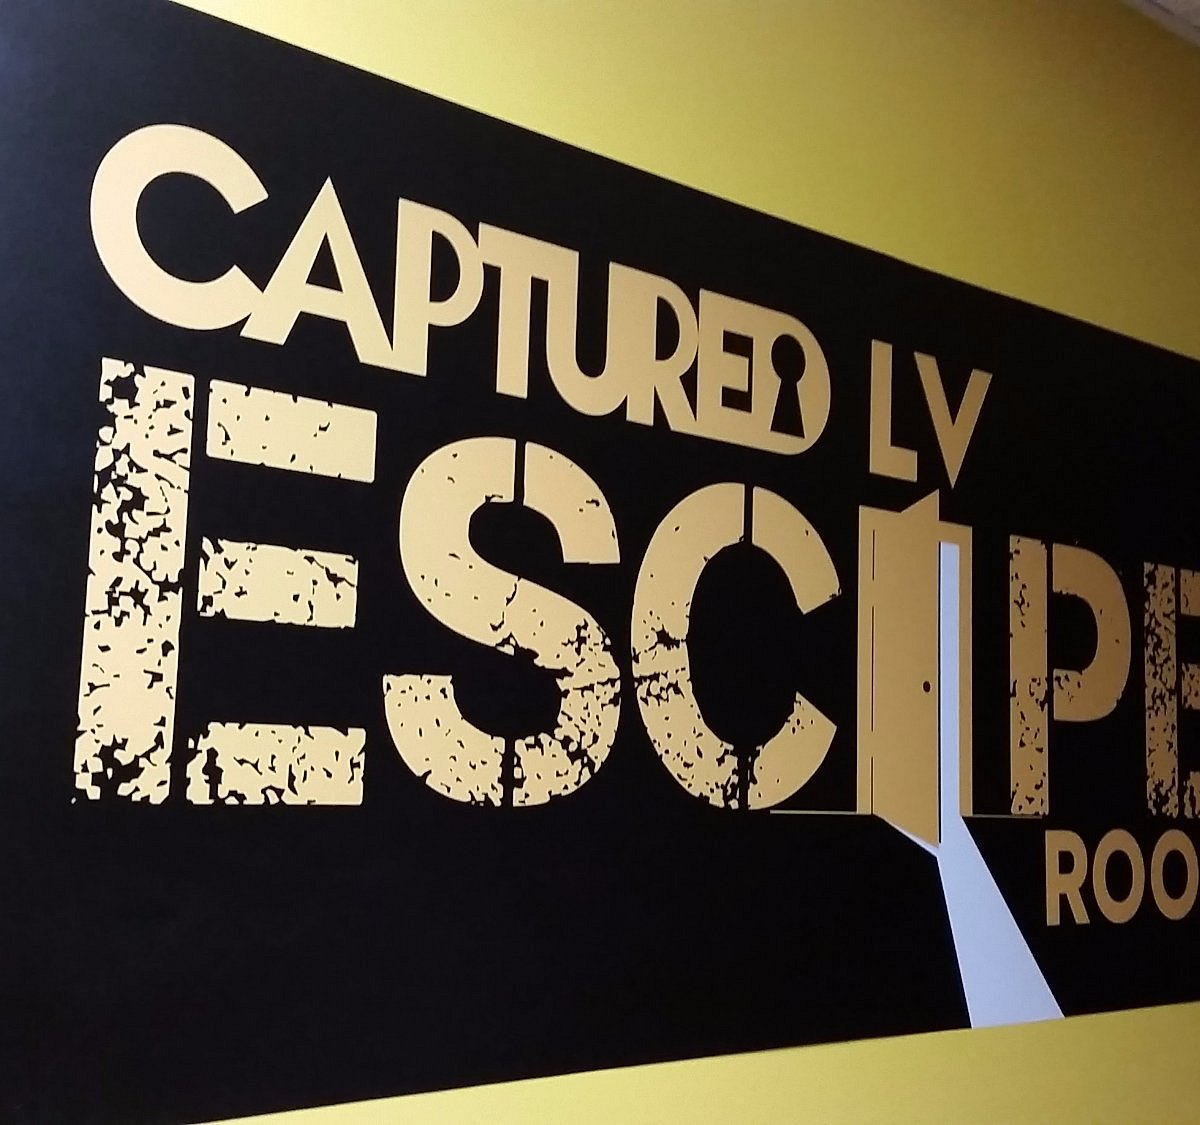 CAPTURED LV ESCAPE ROOM - 25 Photos & 19 Reviews - 559 Main St, Bethlehem,  Pennsylvania - Escape Games - Phone Number - Yelp